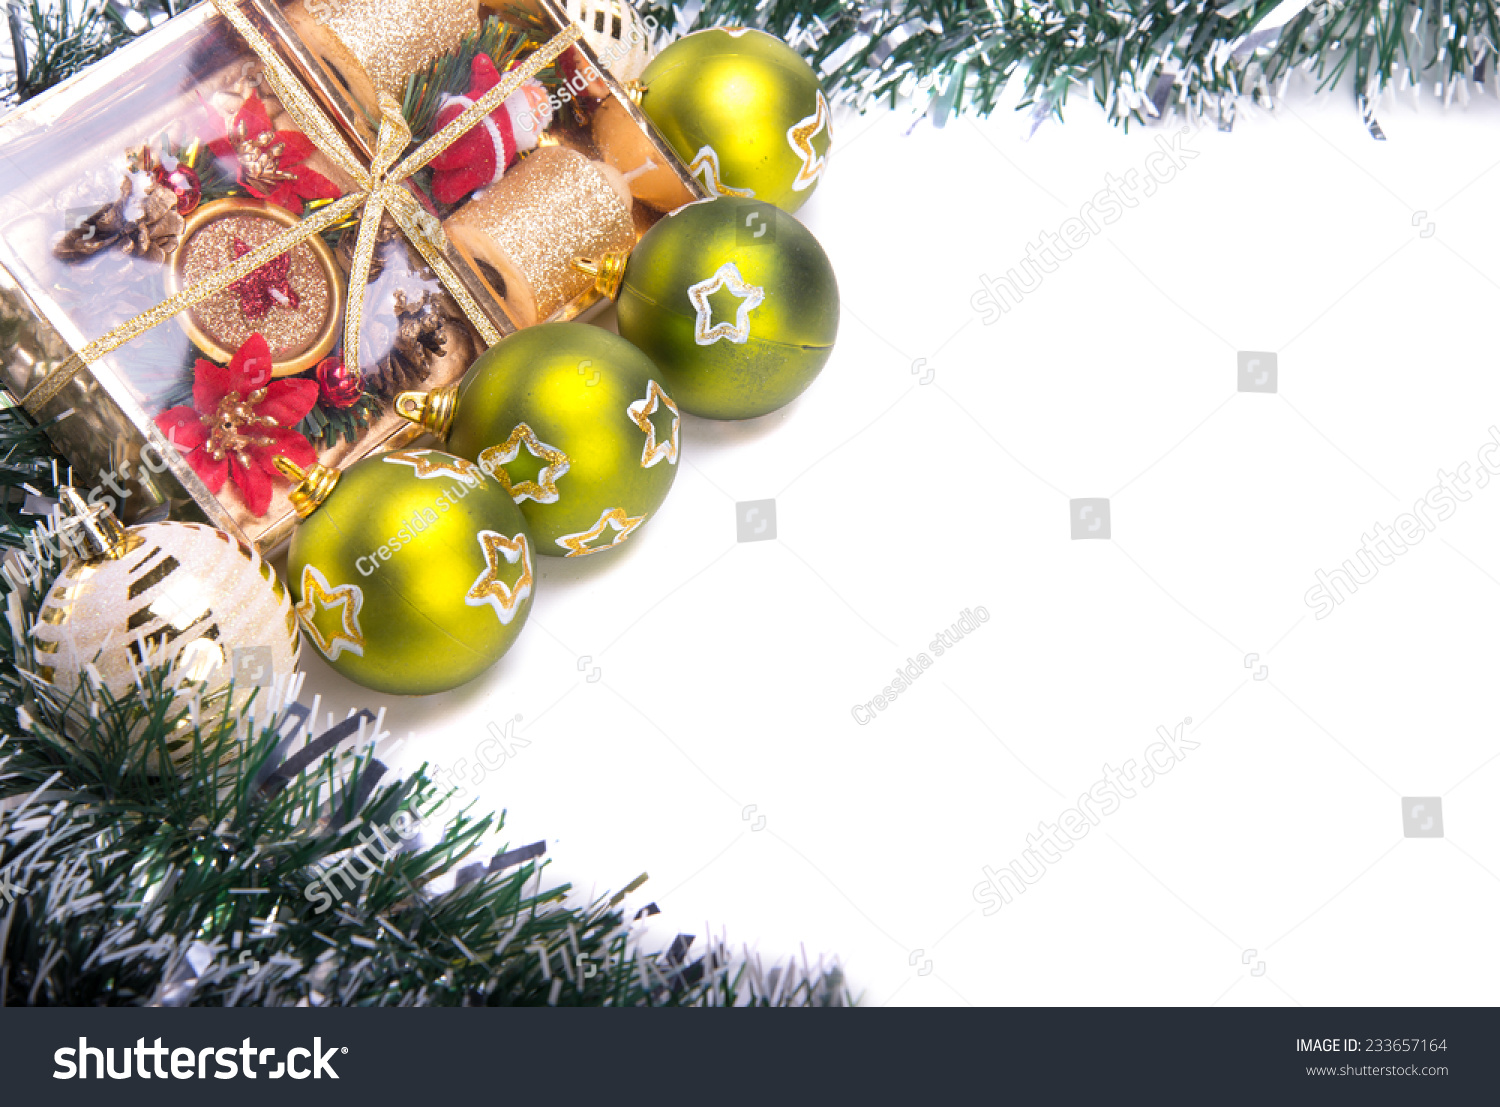 Beautiful Christmas holiday decorations. New Year's Eve. Festive Christmas decorations. Christmas background #233657164